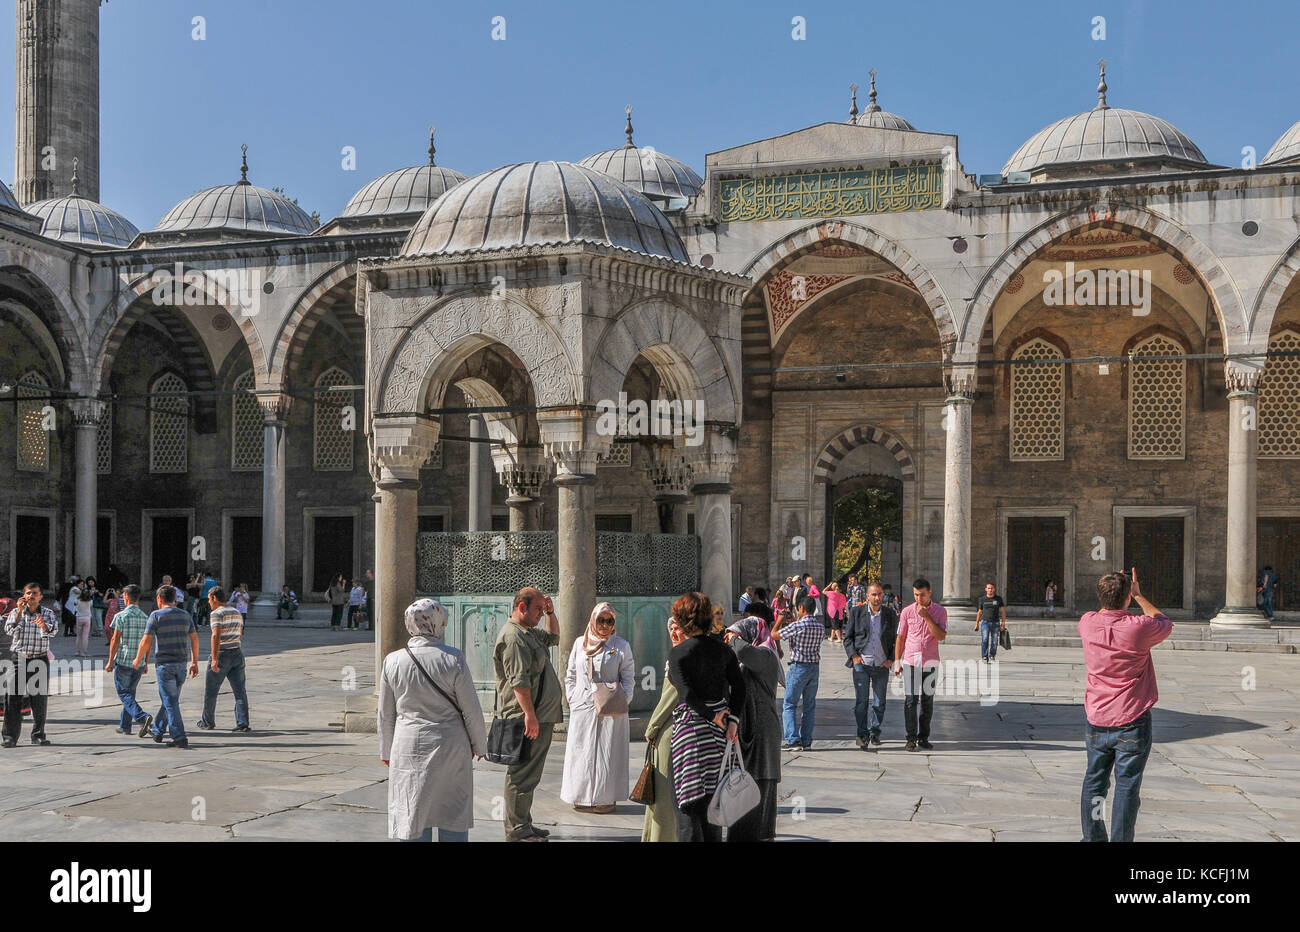 Sultan Ahmet Camii, Blue Mosque, Istanbul, Turkey Stock Photo